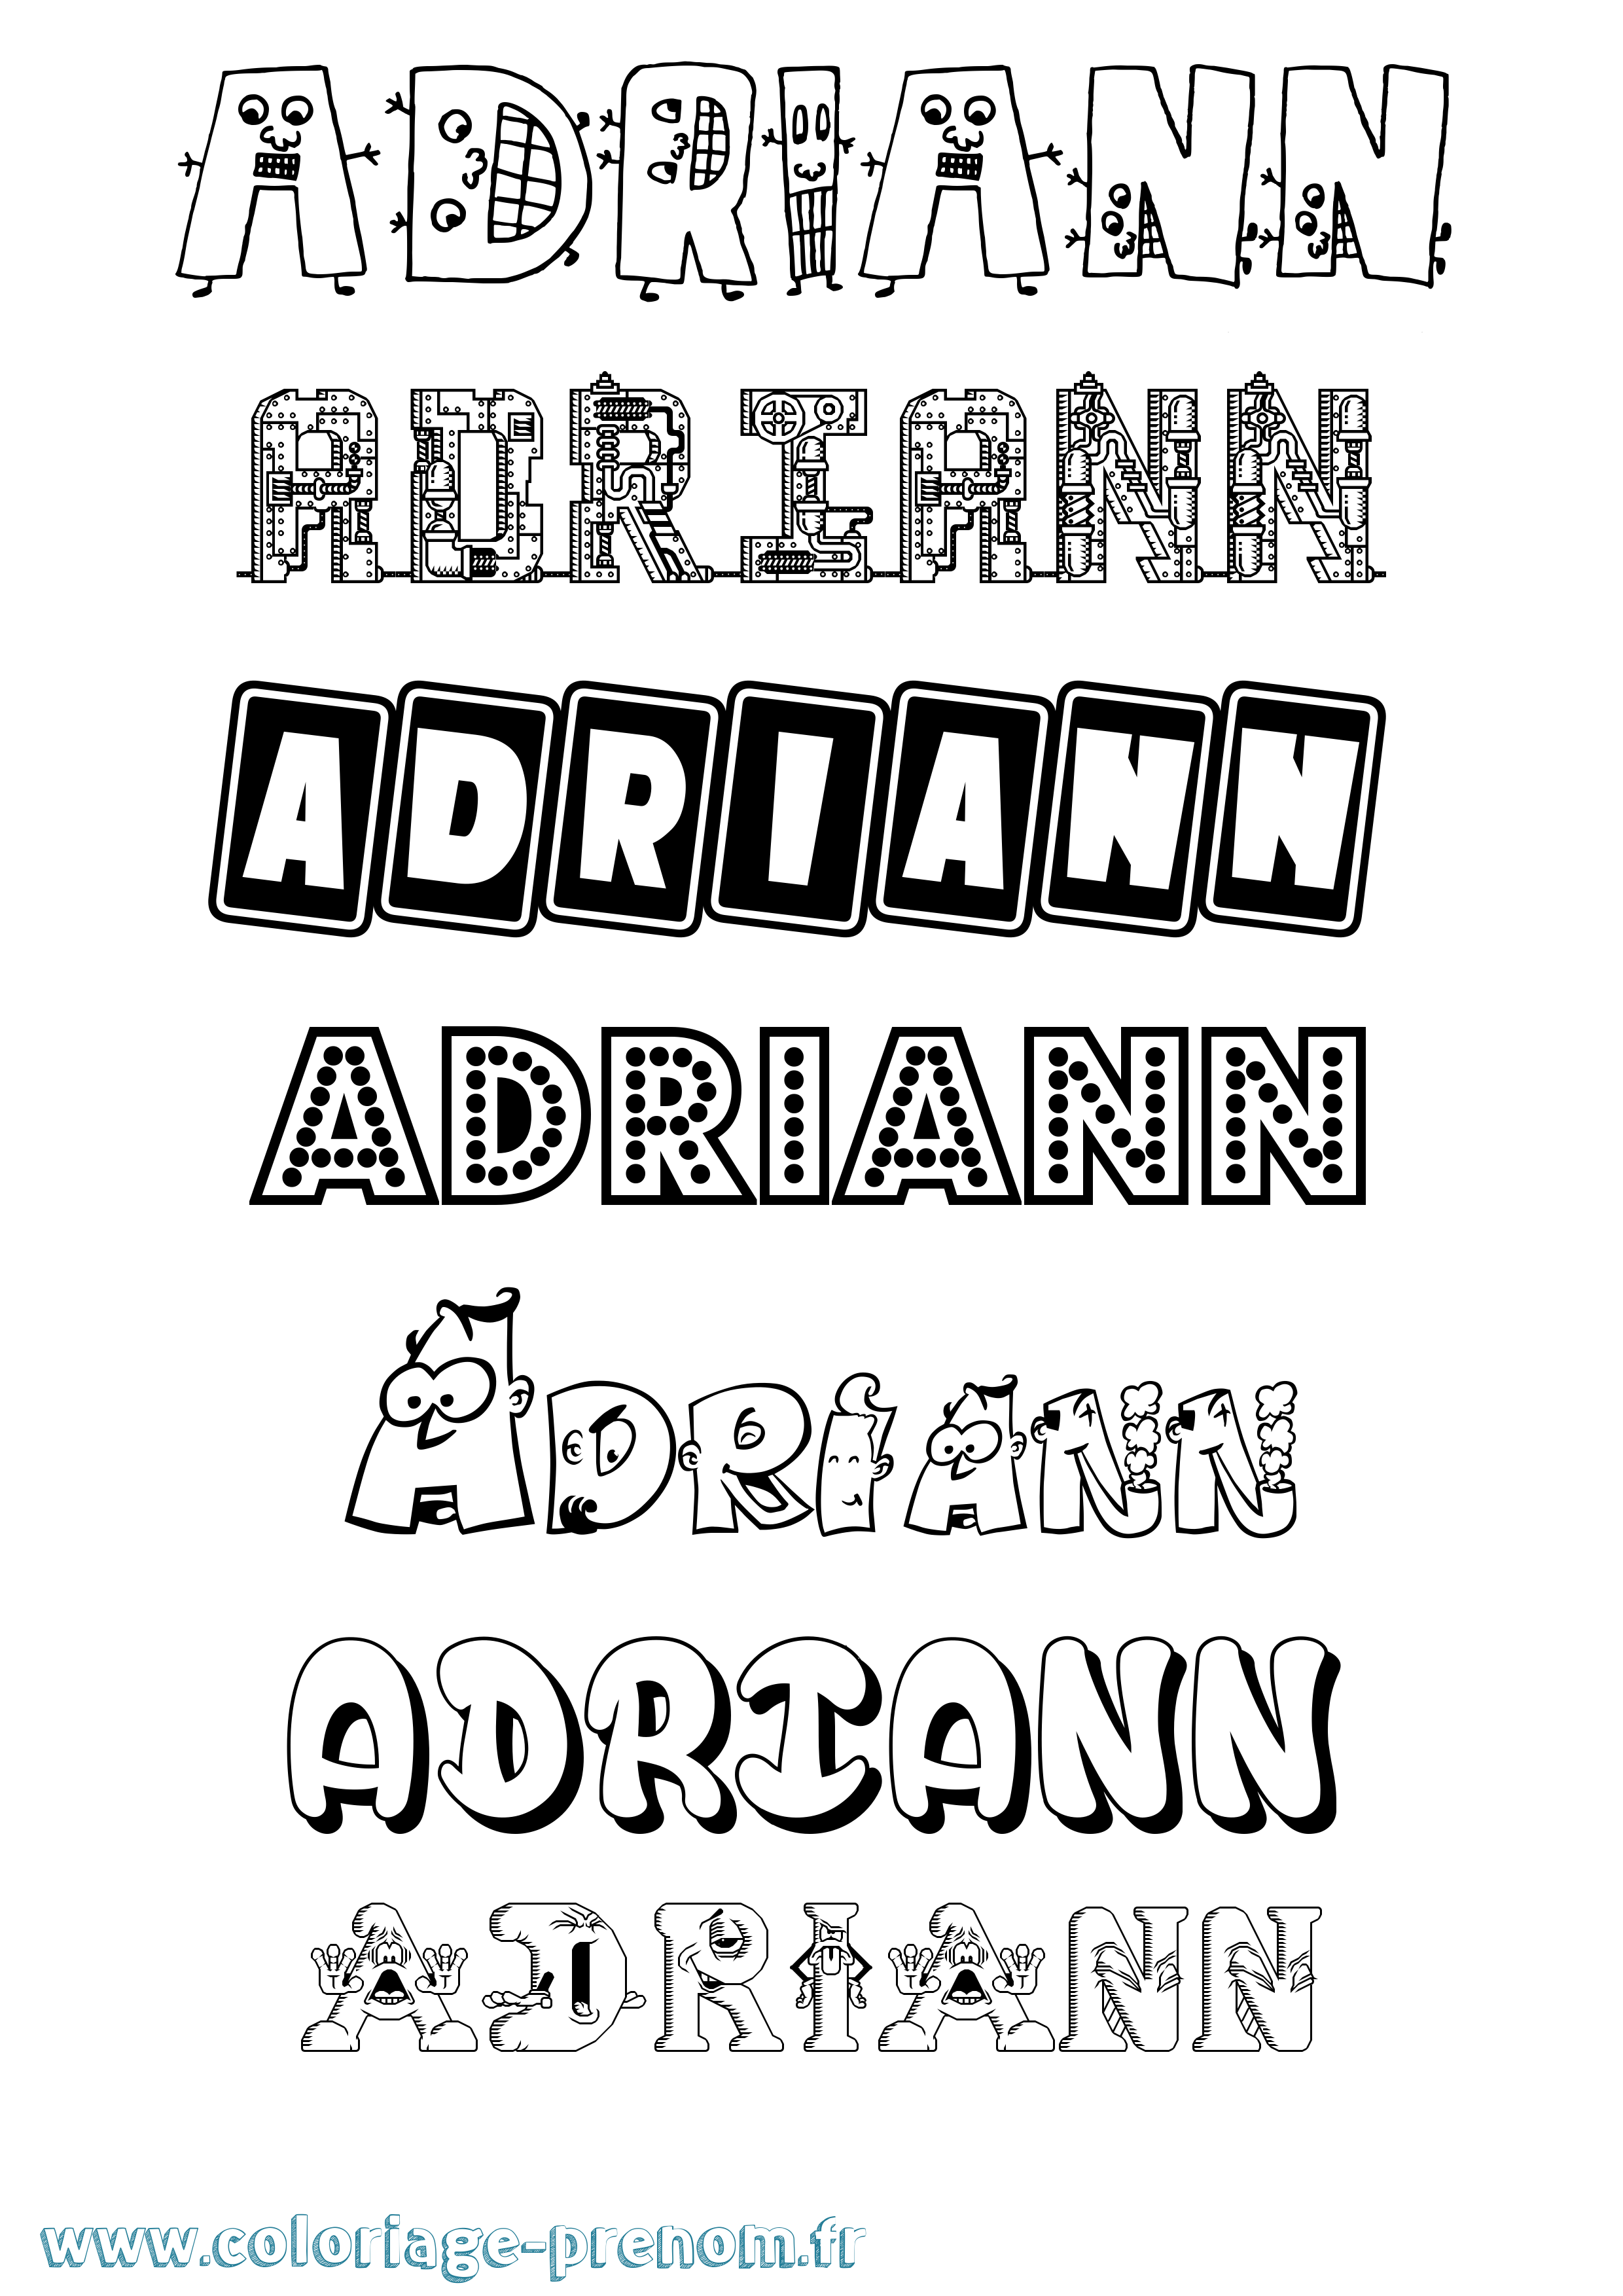 Coloriage prénom Adriann Fun